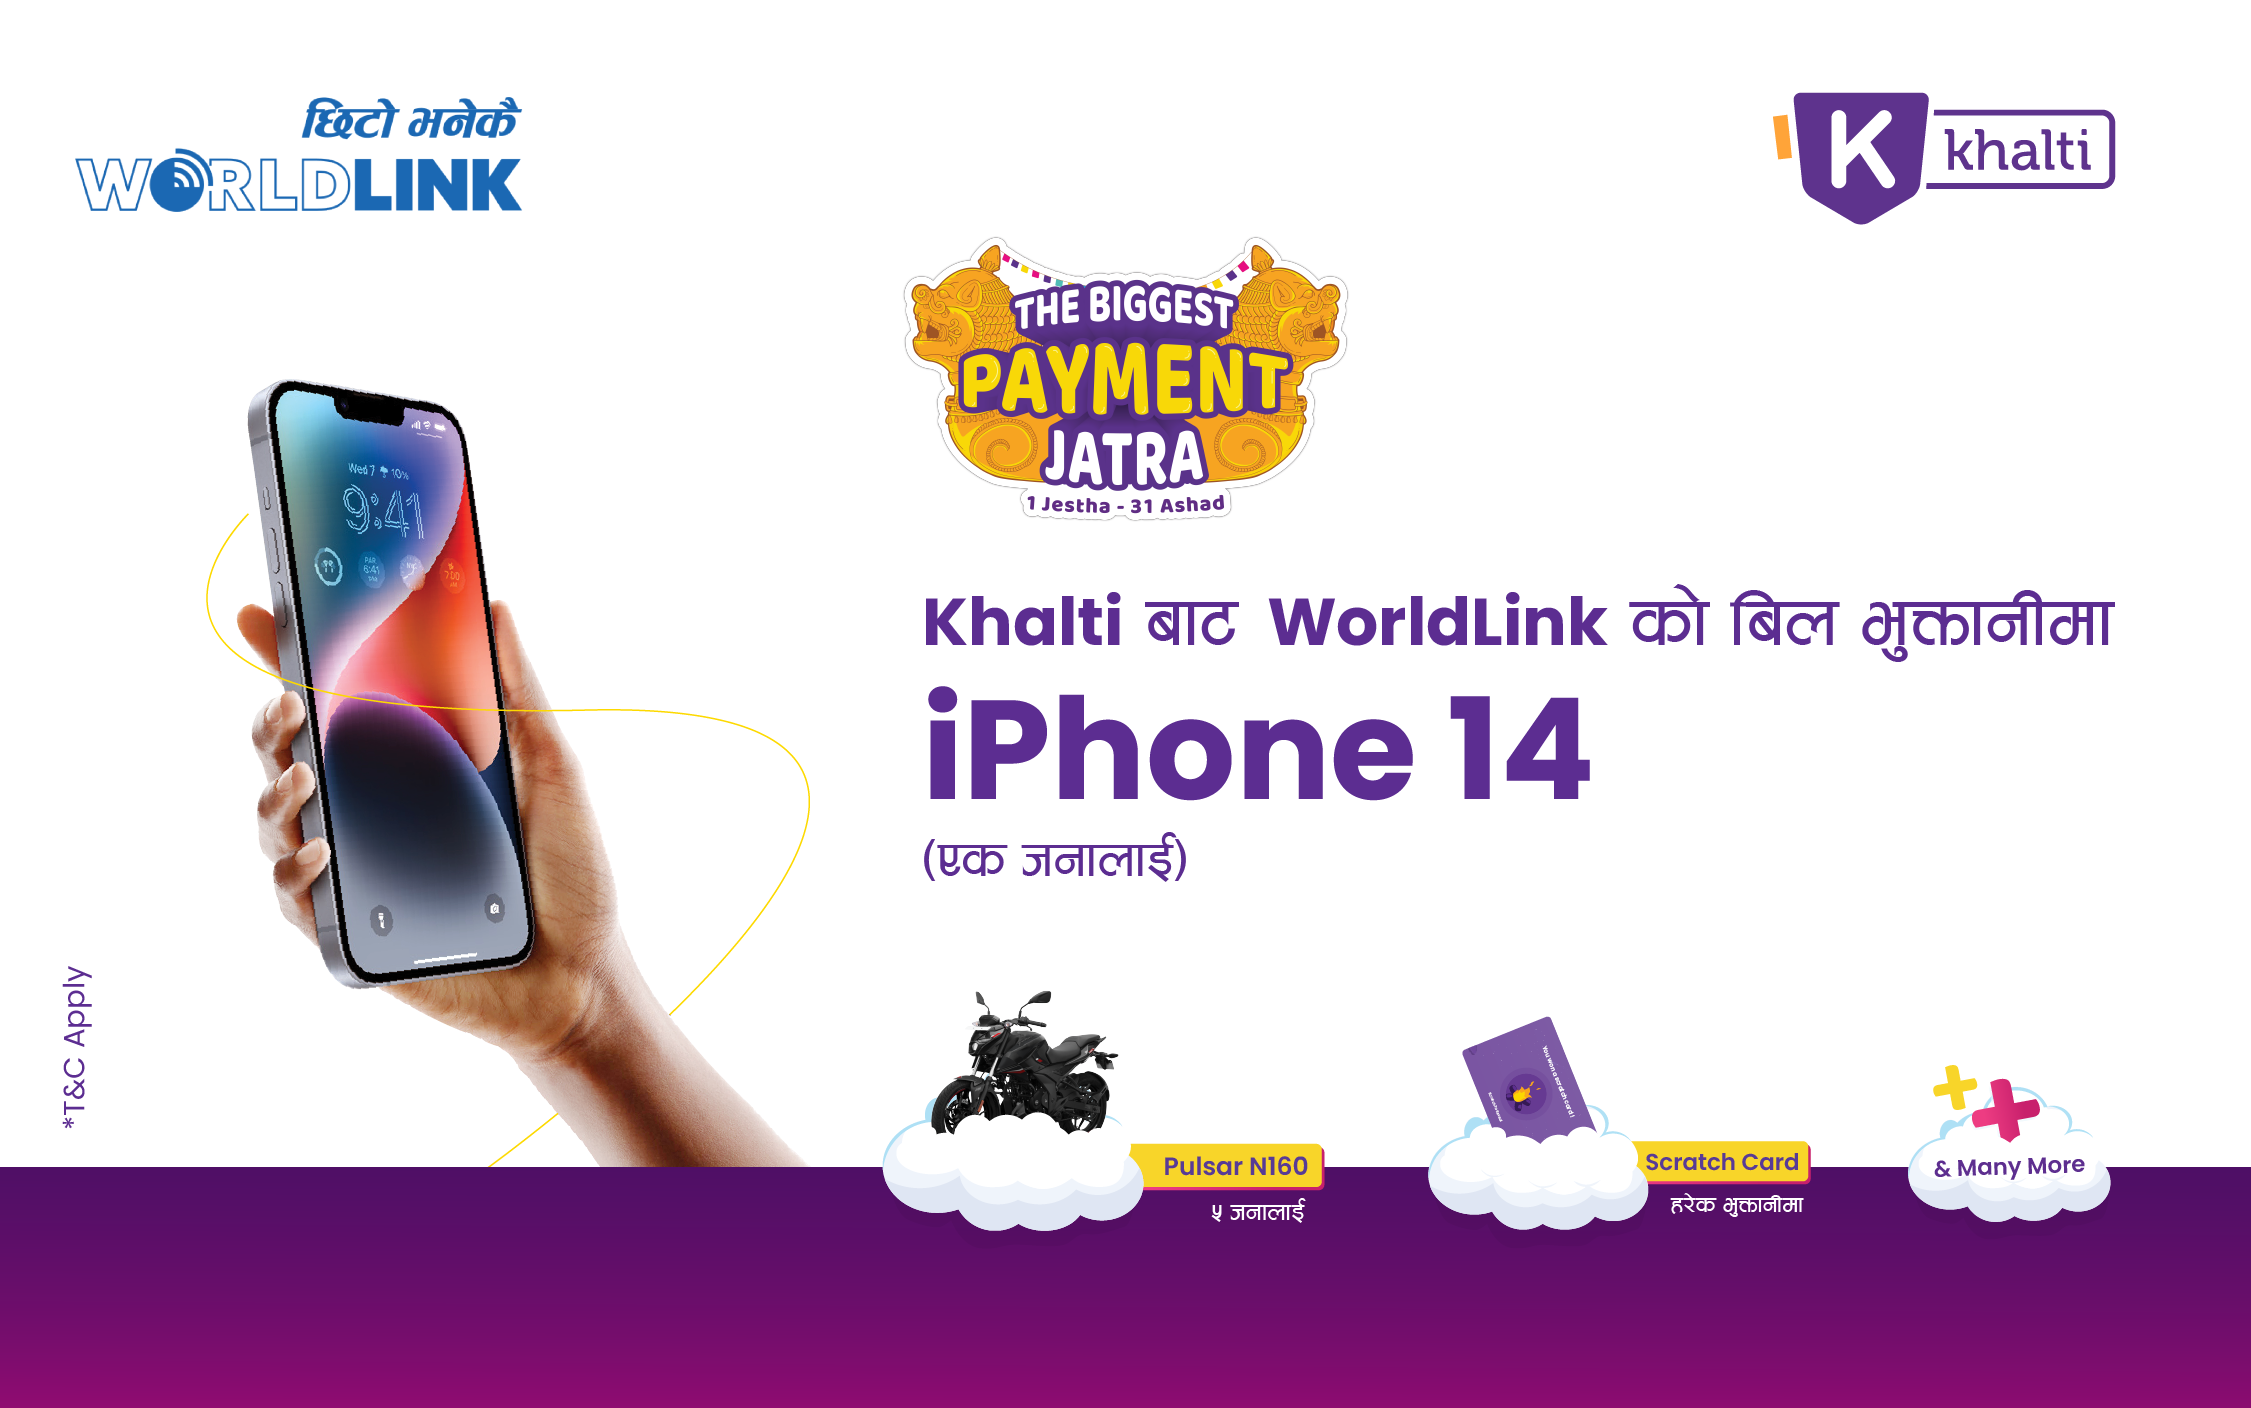 Win an iPhone 14 on WorldLink Payment - Payment Jatra offer